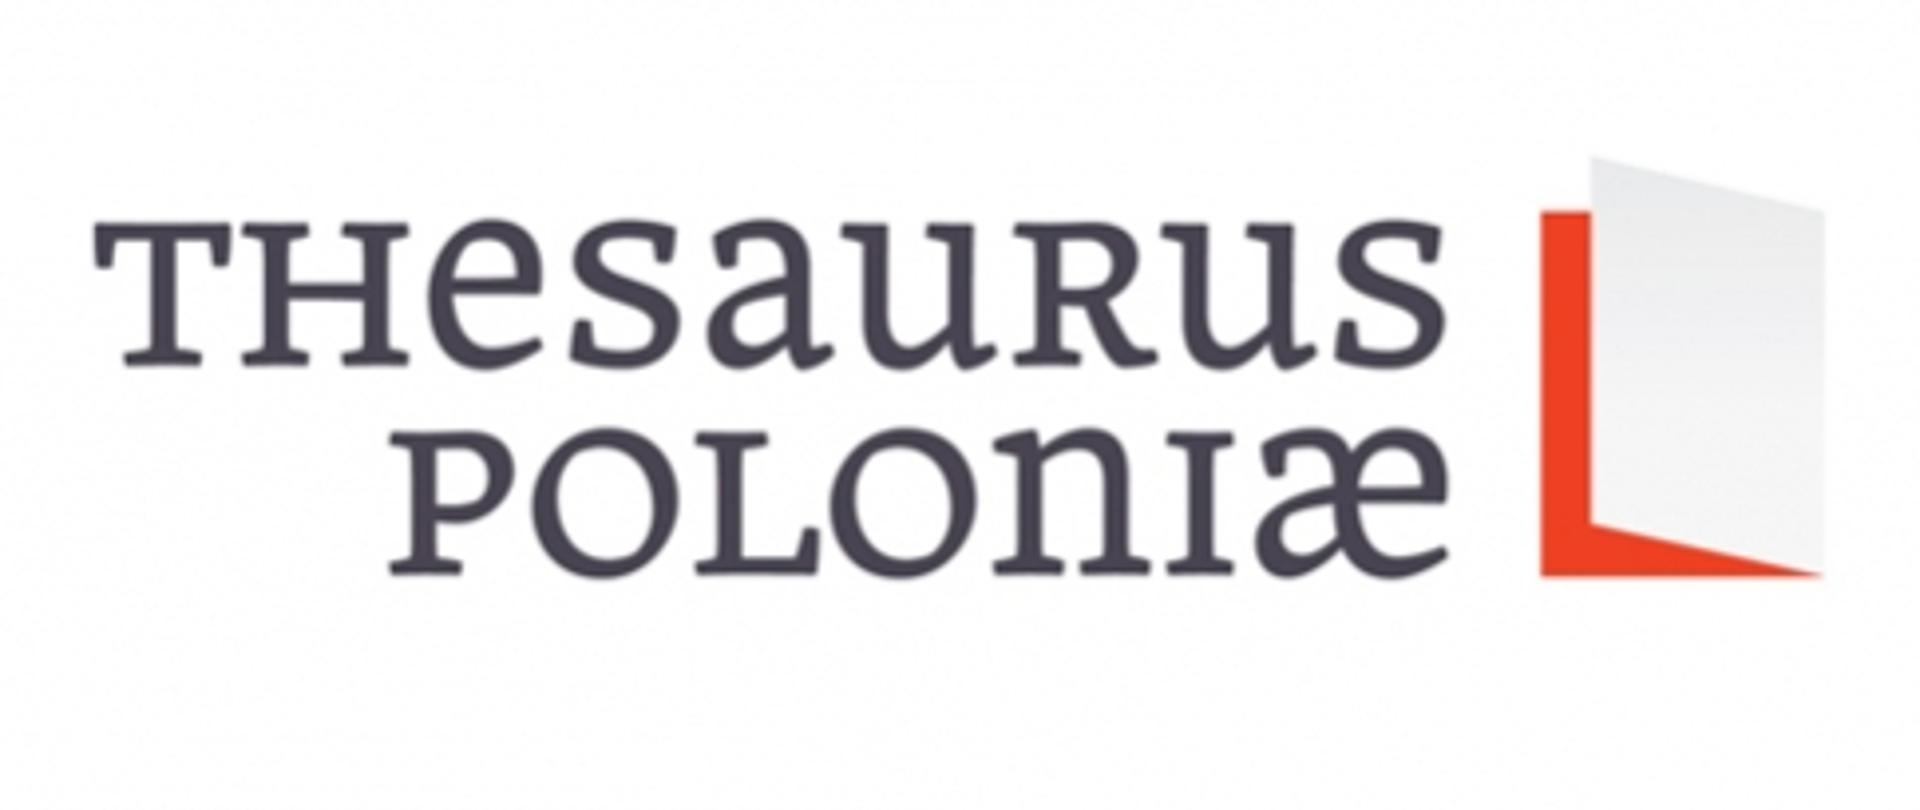 Thesaurus Poloniae 